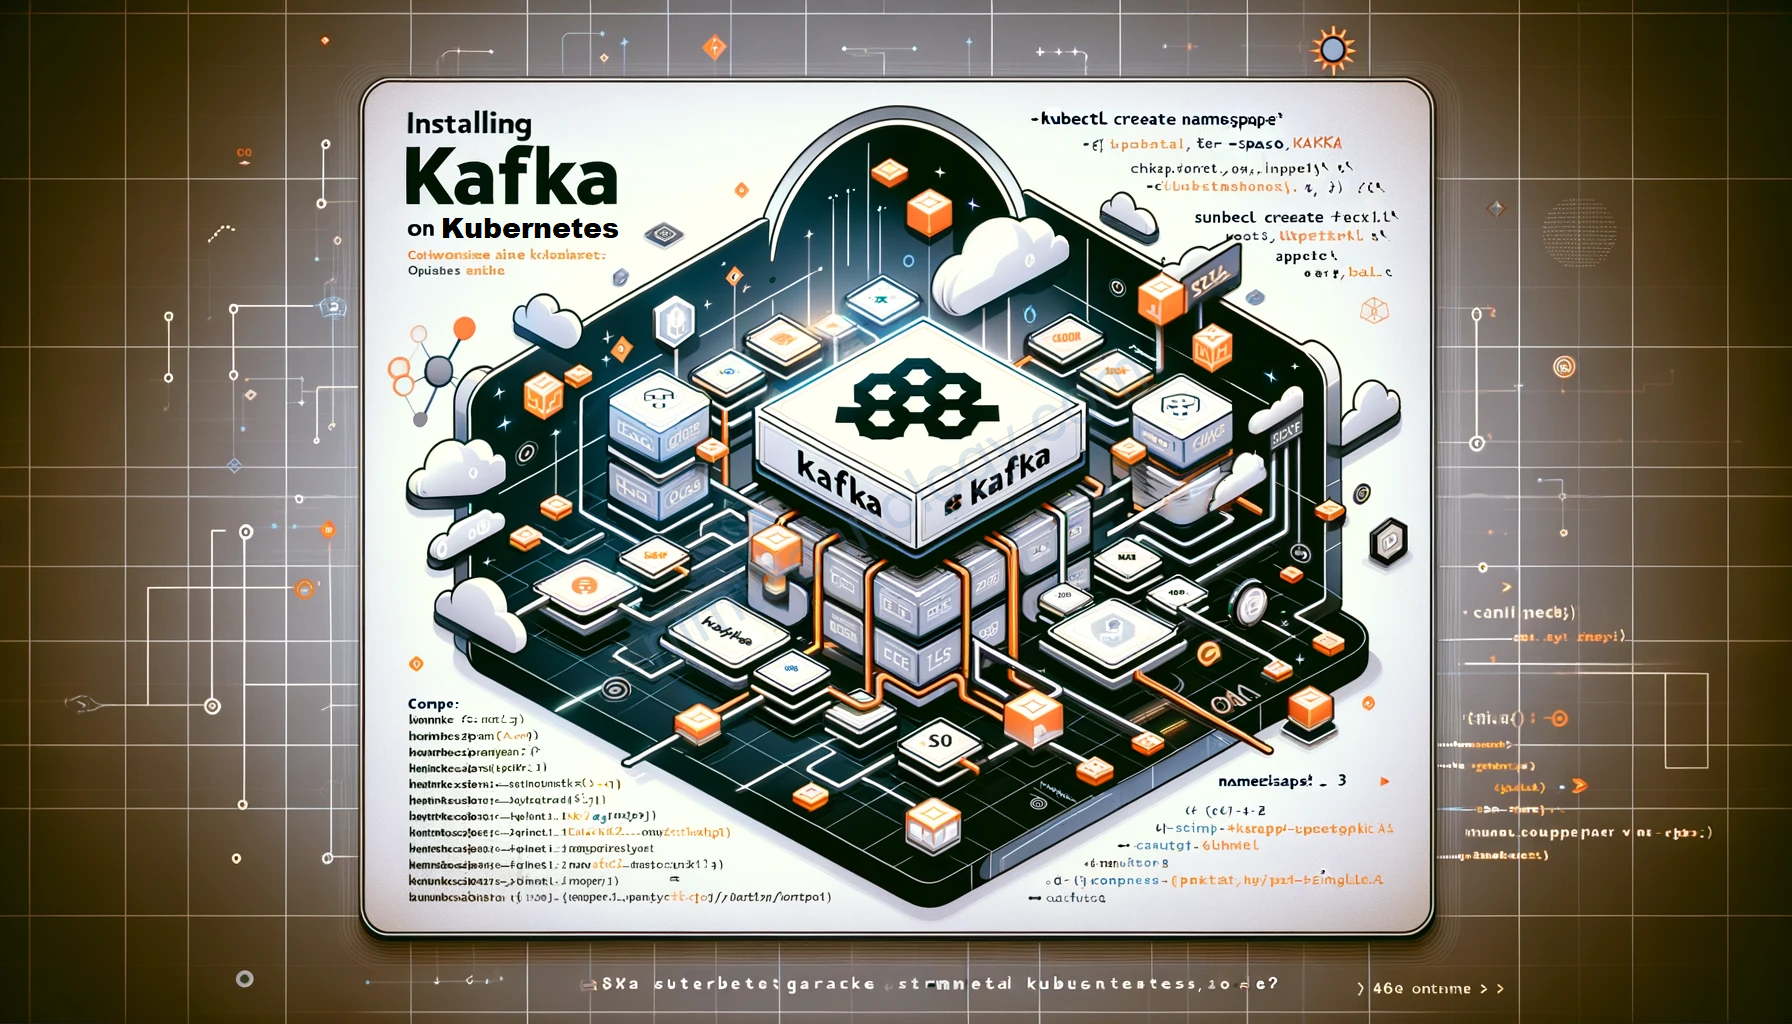 [Kafka/Strimzi] Install kafka cluster on k8s by Strimzi